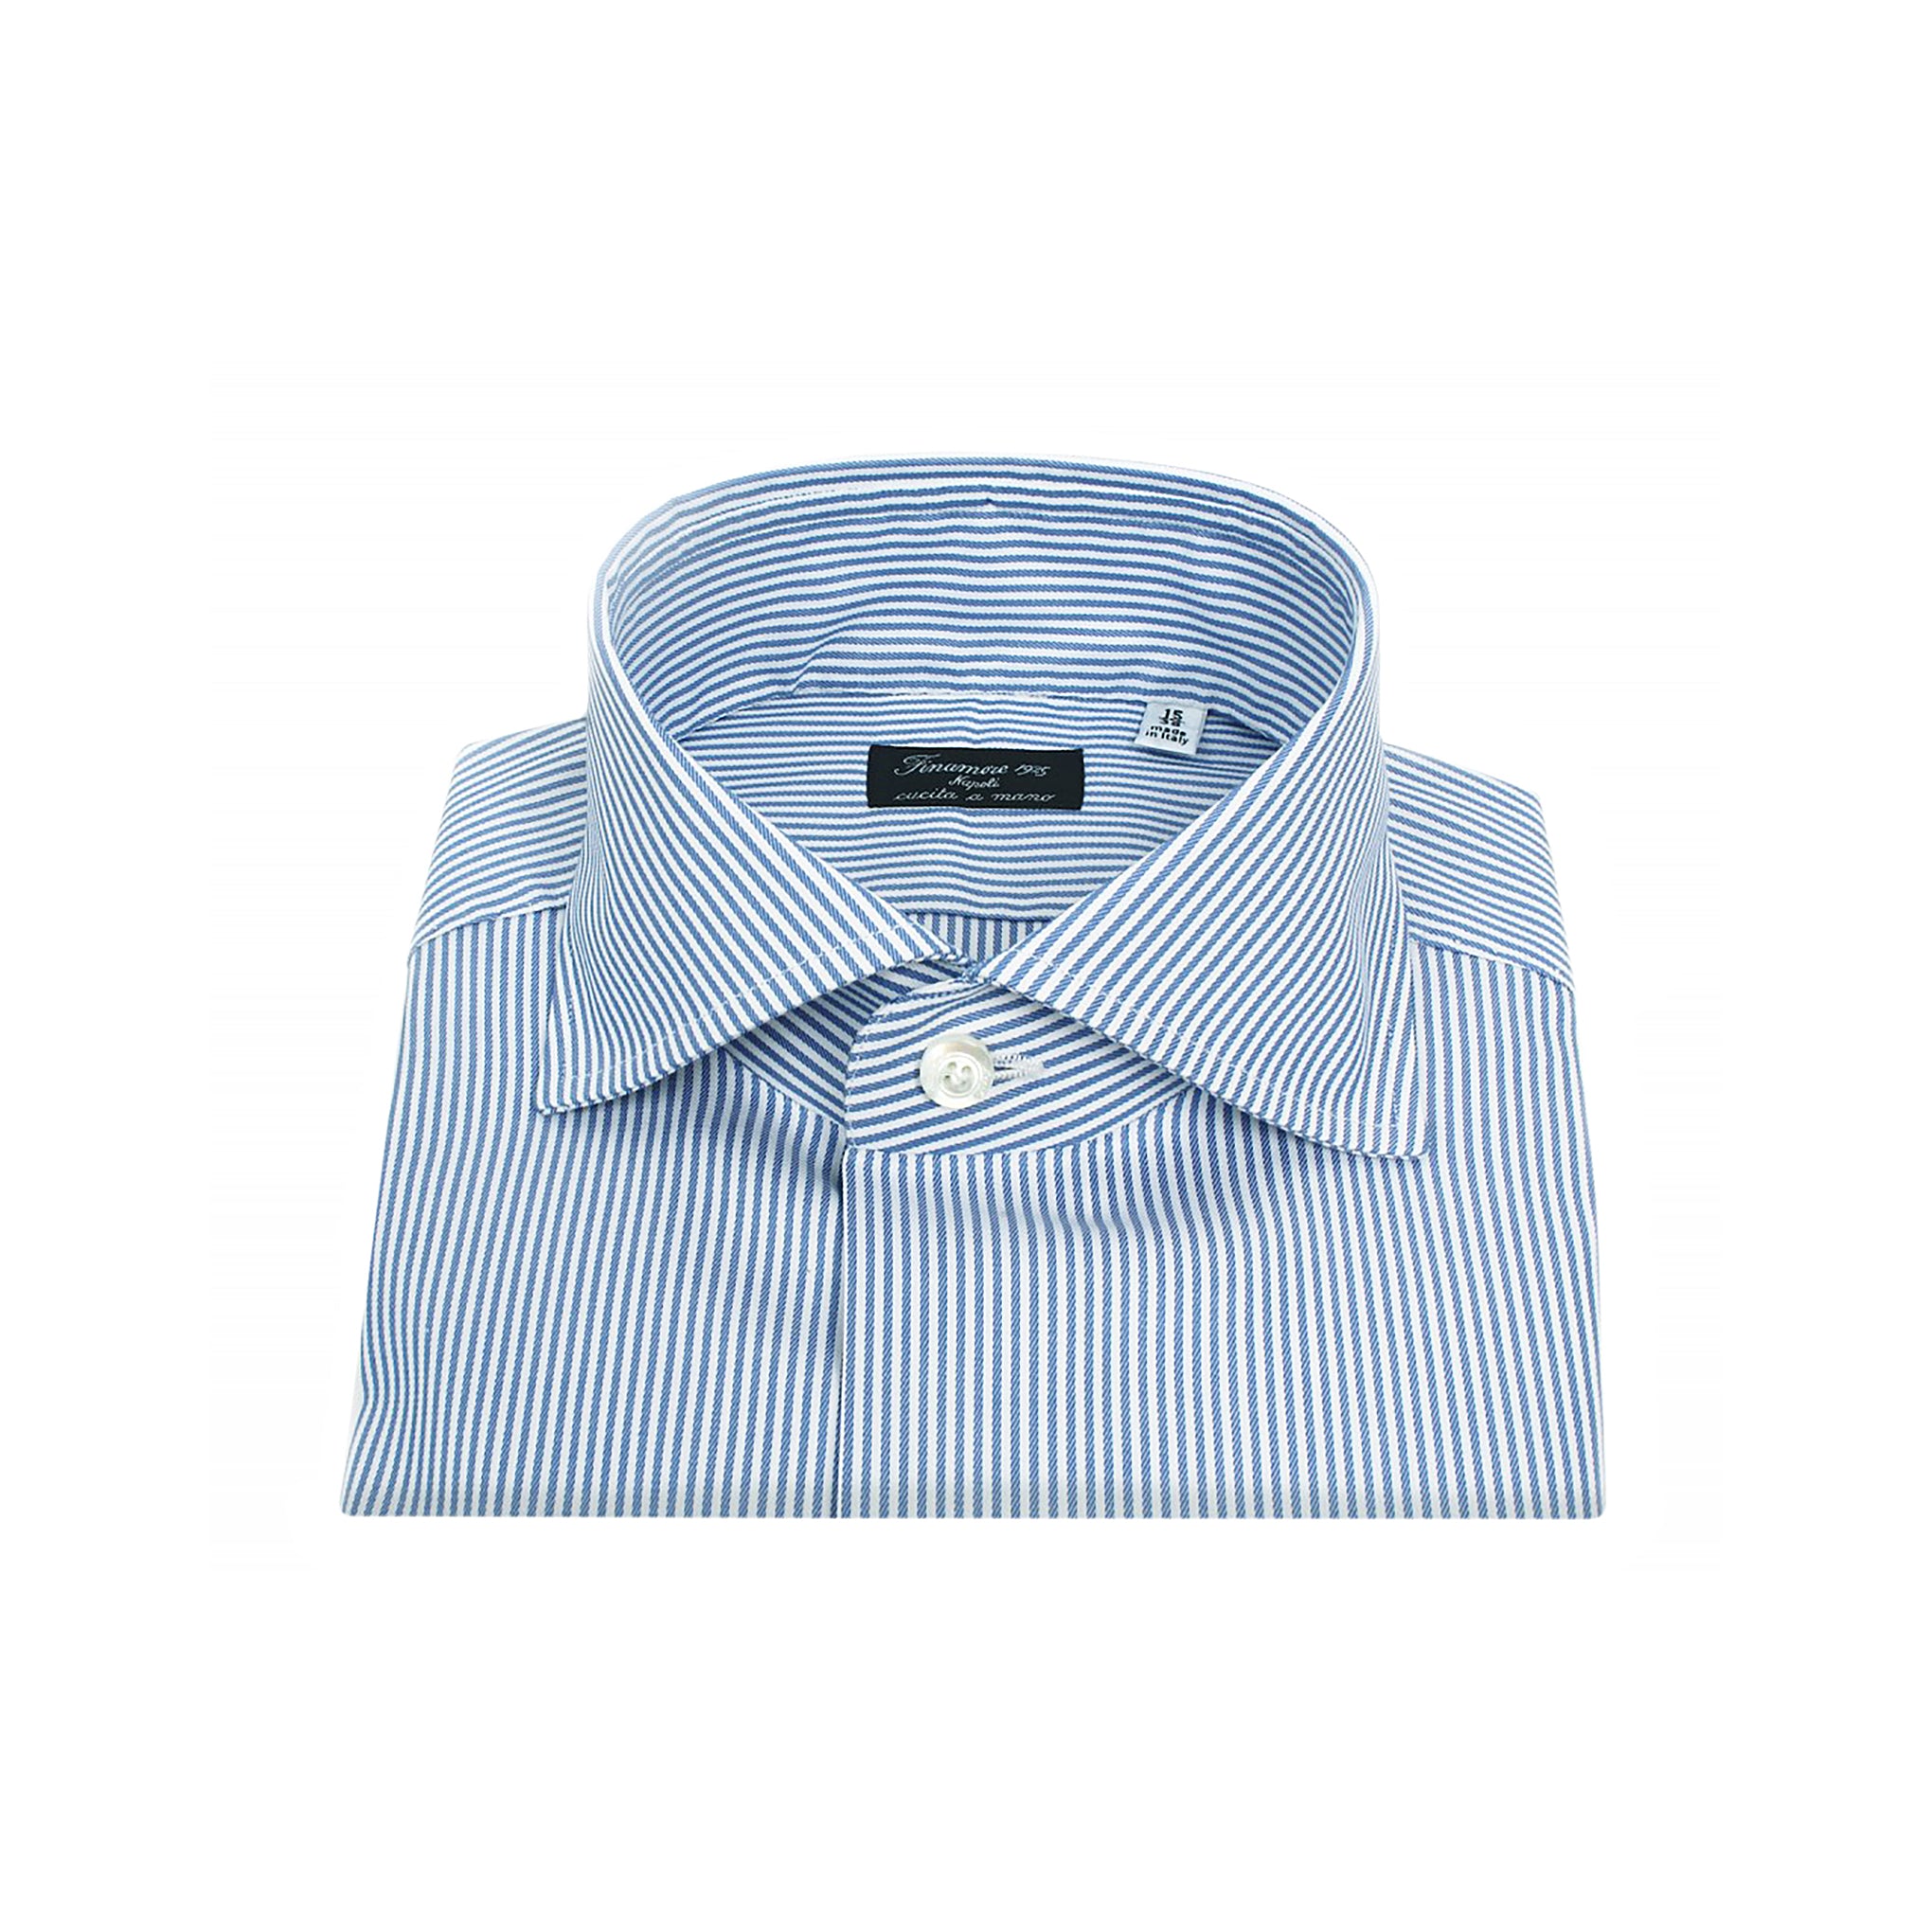 Classic shirt cotton light blue stripe twill Napoli